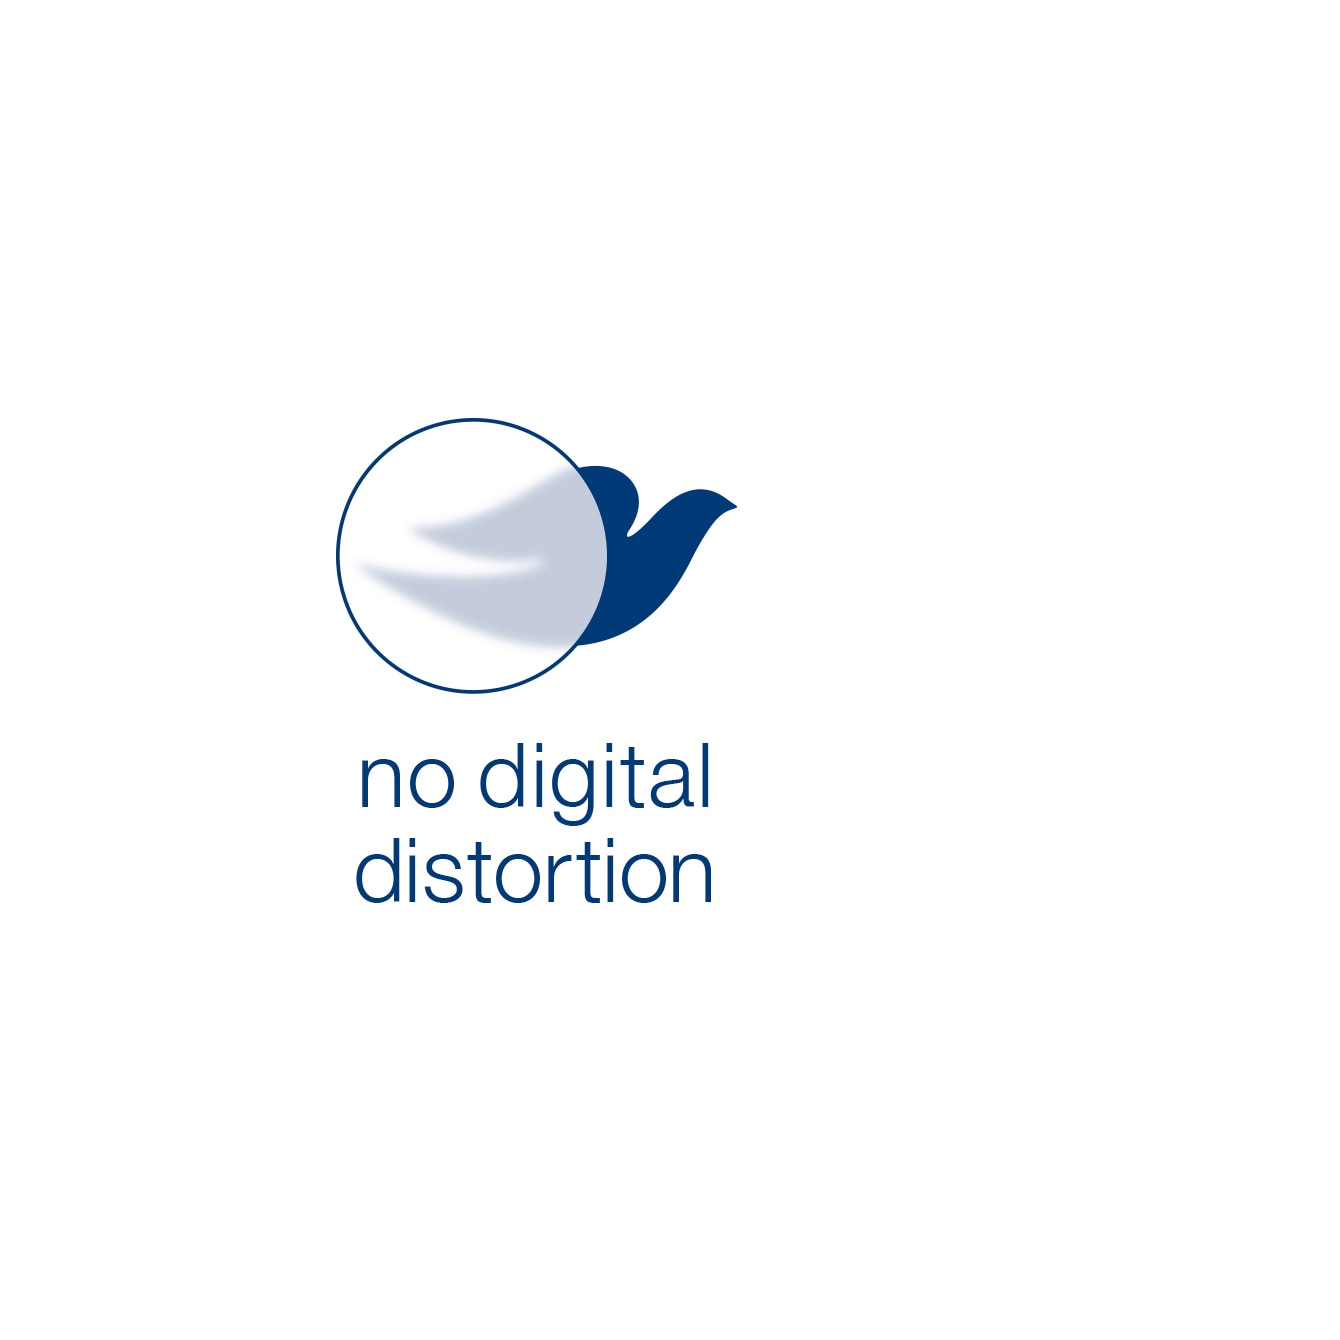 Our ‘No Digital Distortion’ mark